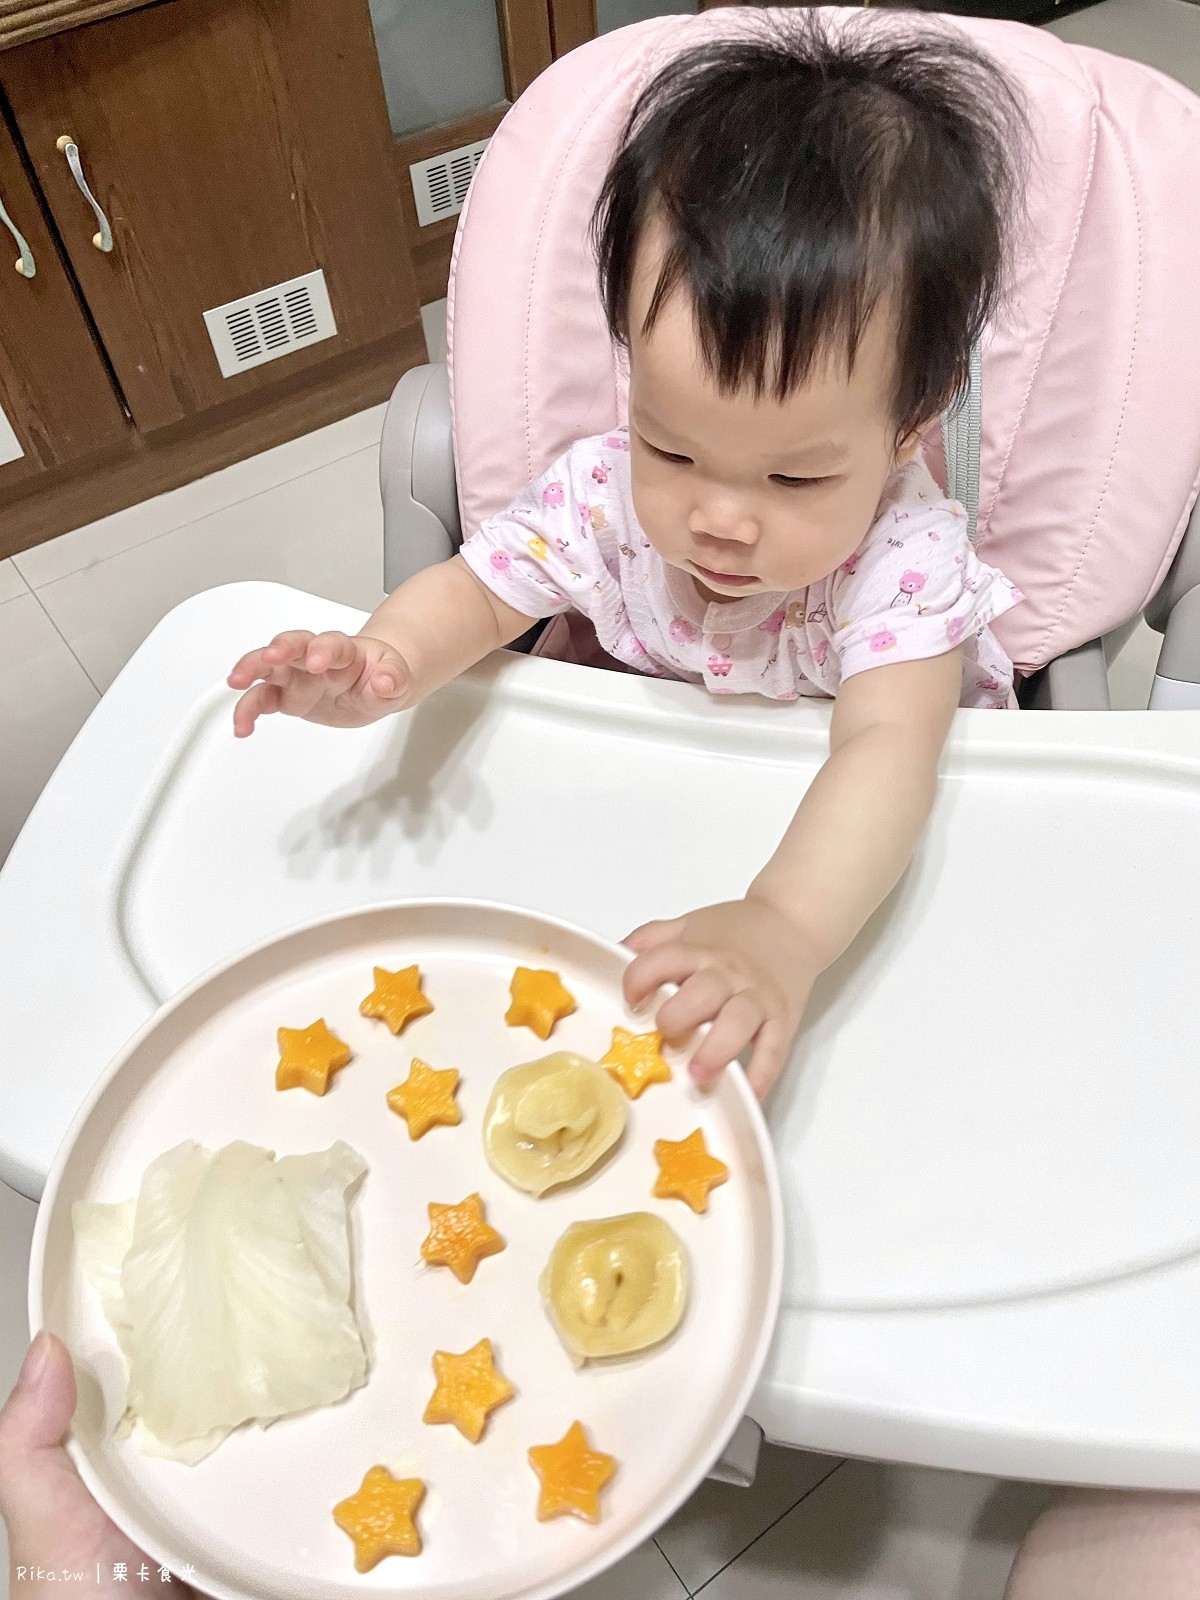 Ｍiniware麵包盤寬度大可以讓媽媽擺盤增加寶寶食慾 